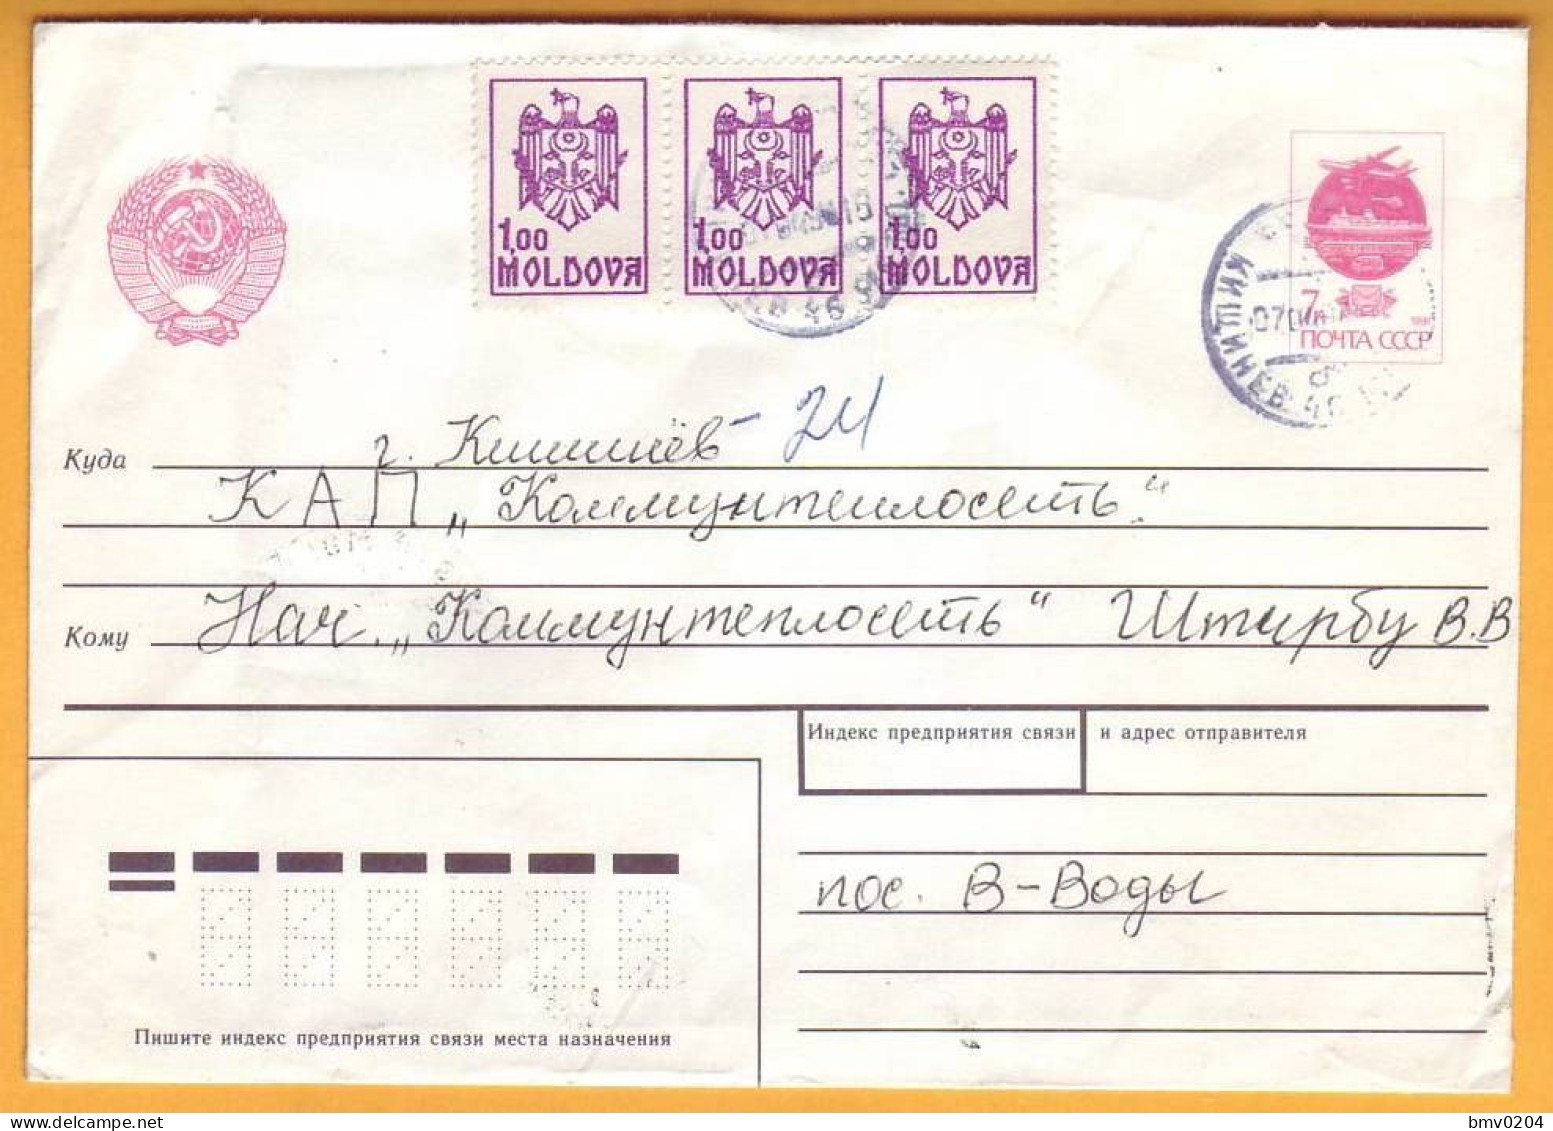 1993, Moldova Moldavie Moldau; USSR  Real-mail. Used Envelope. Coat Of Arms Coat Of Arms. - Moldova